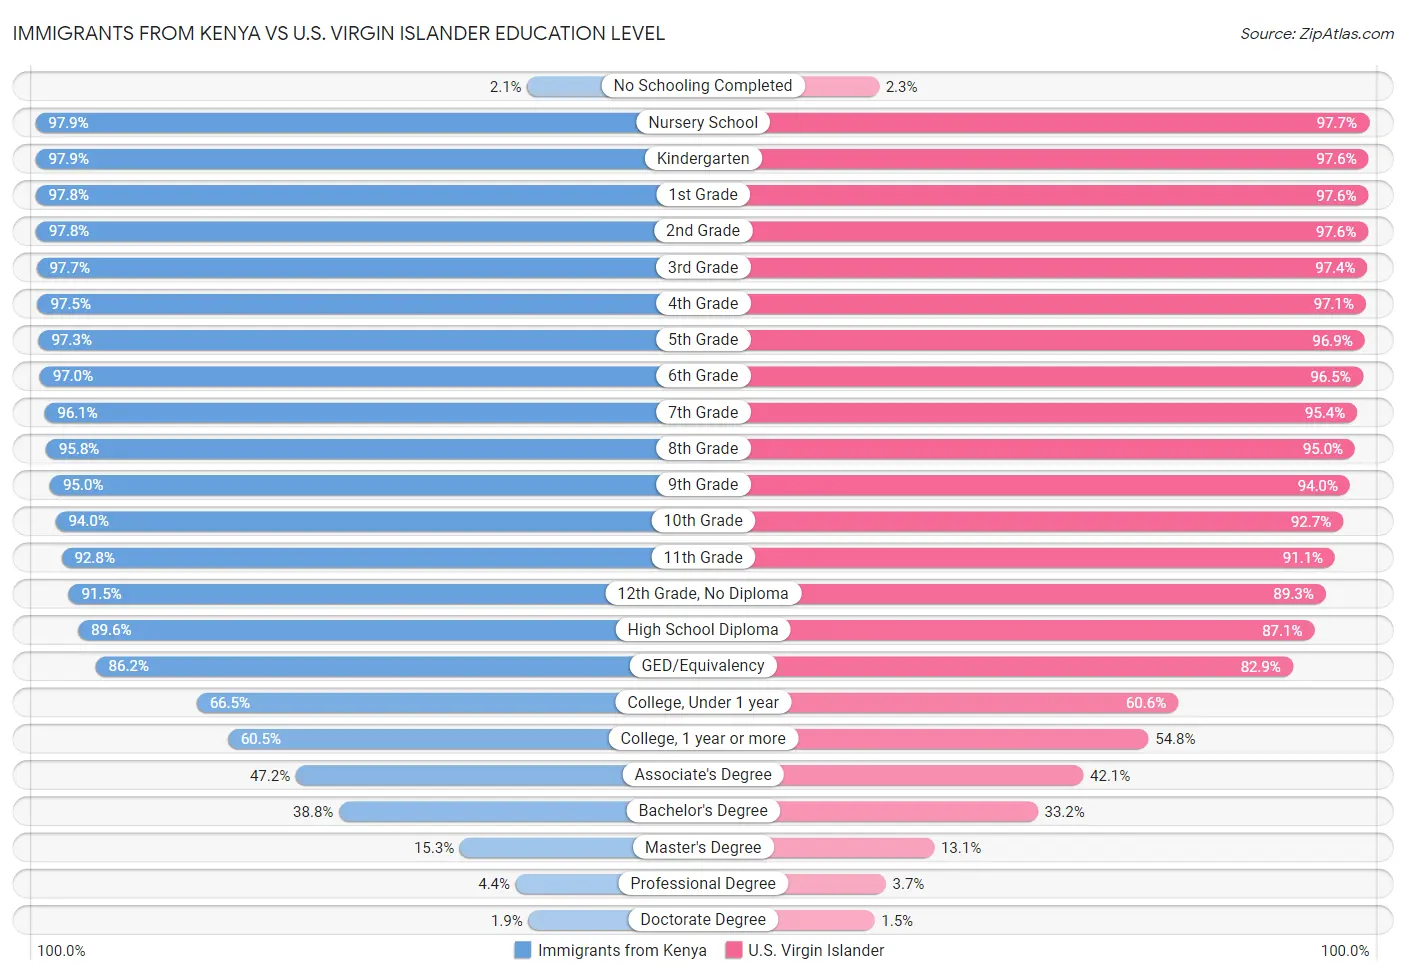 Immigrants from Kenya vs U.S. Virgin Islander Education Level